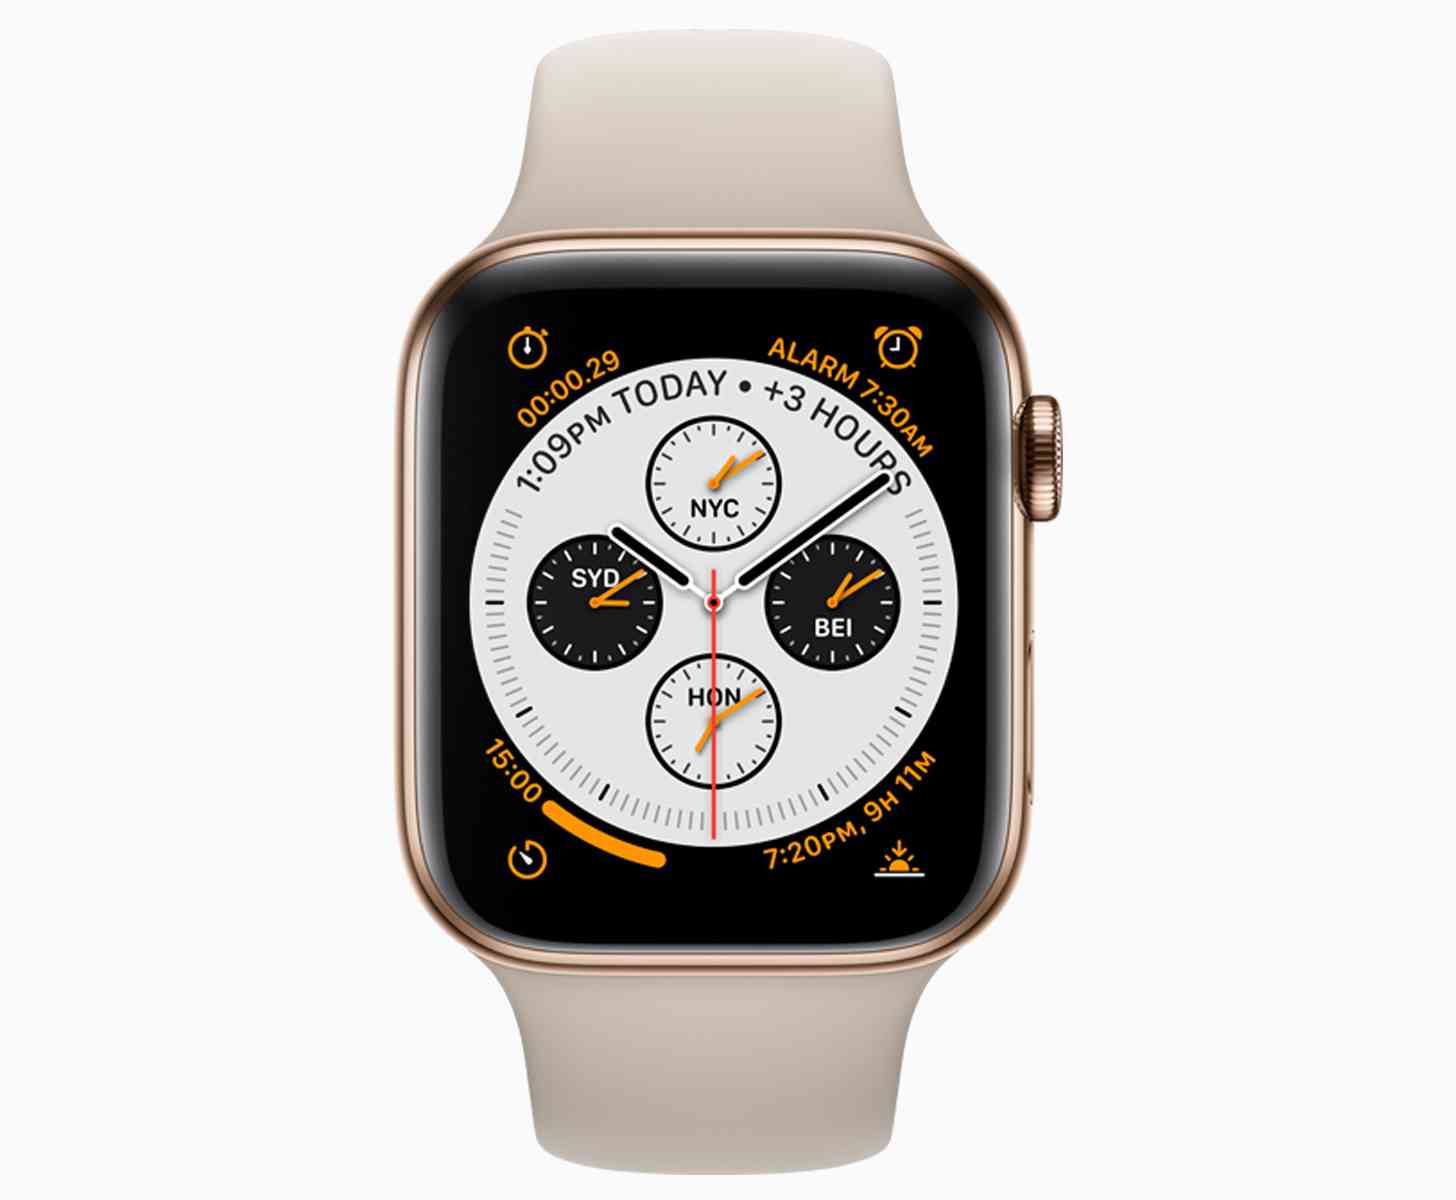 Apple Watch Series 4 new watch face